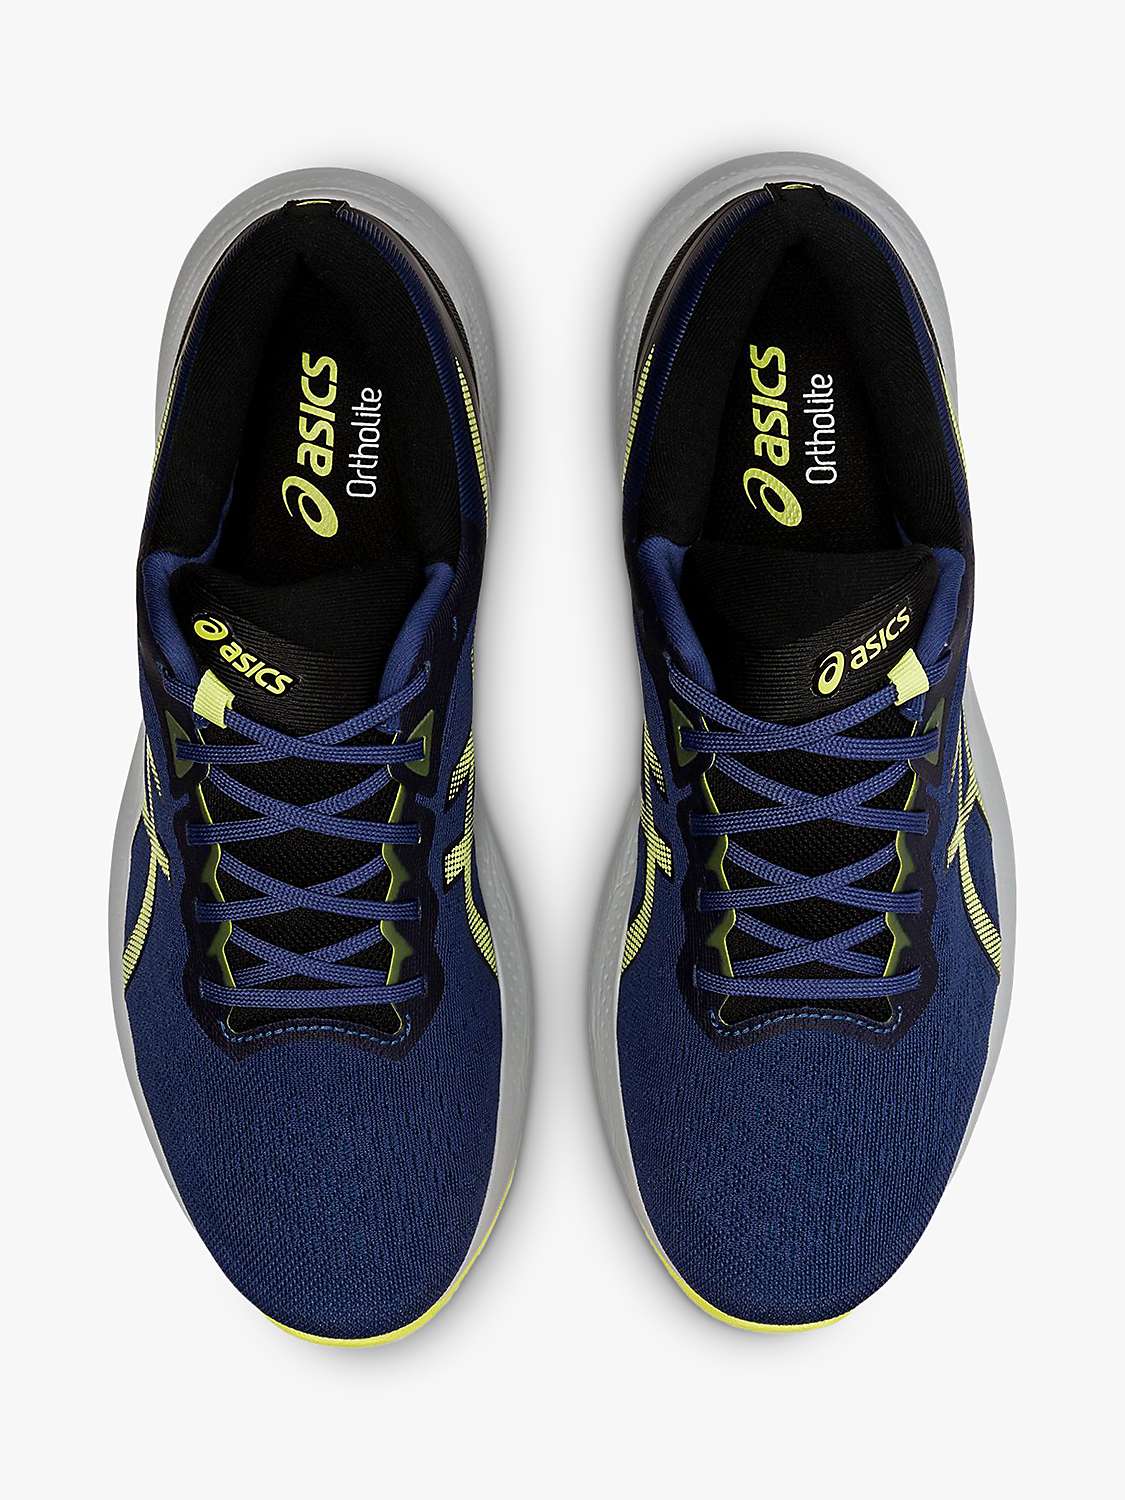 ASICS GEL-PULSE 13 Men's Running Shoes, Thunder Blue/Glow Yellow at ...